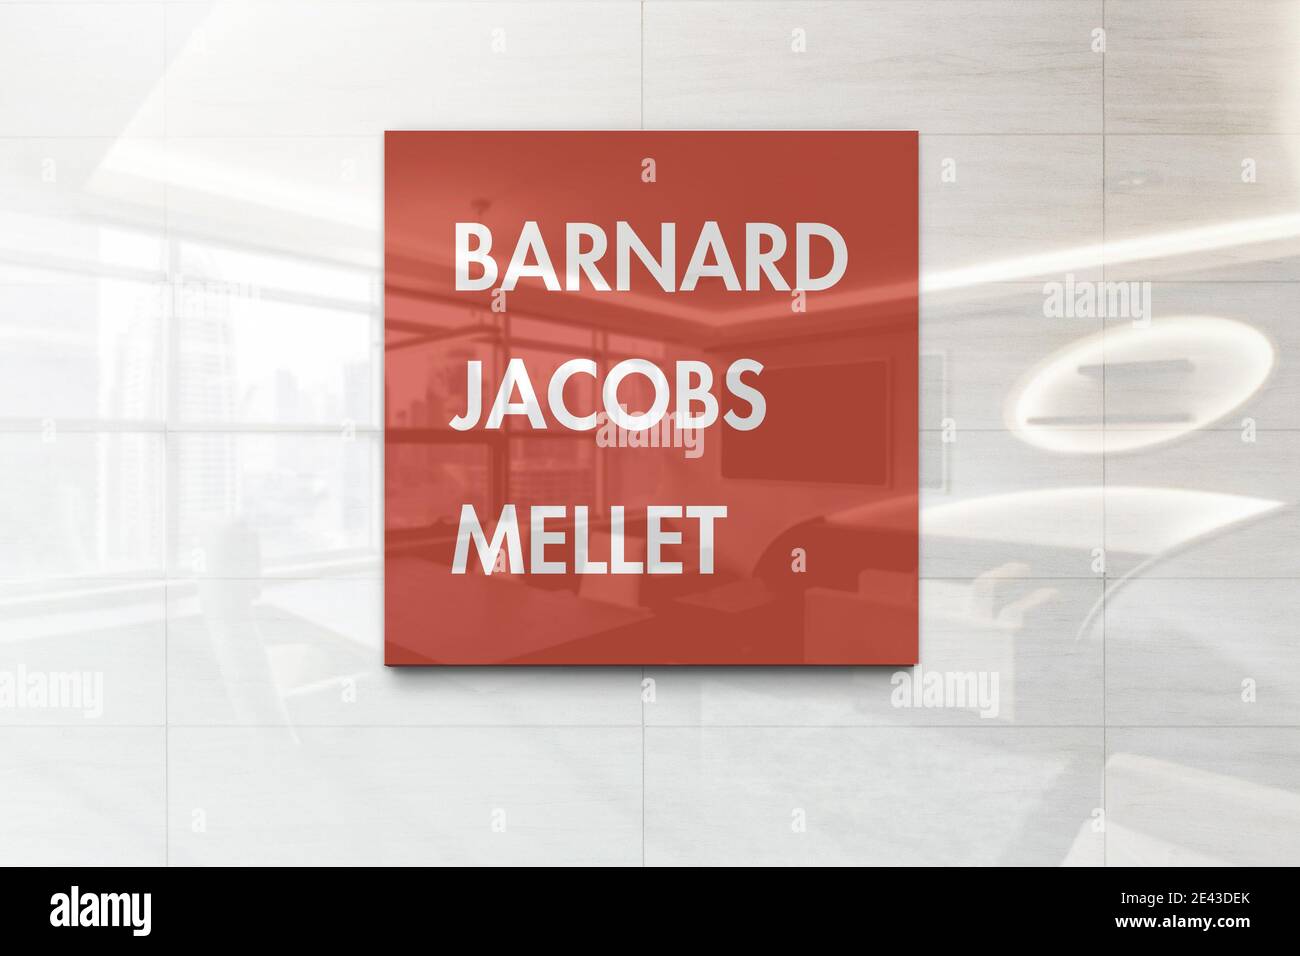 barnard jacobs mellet Stock Photo